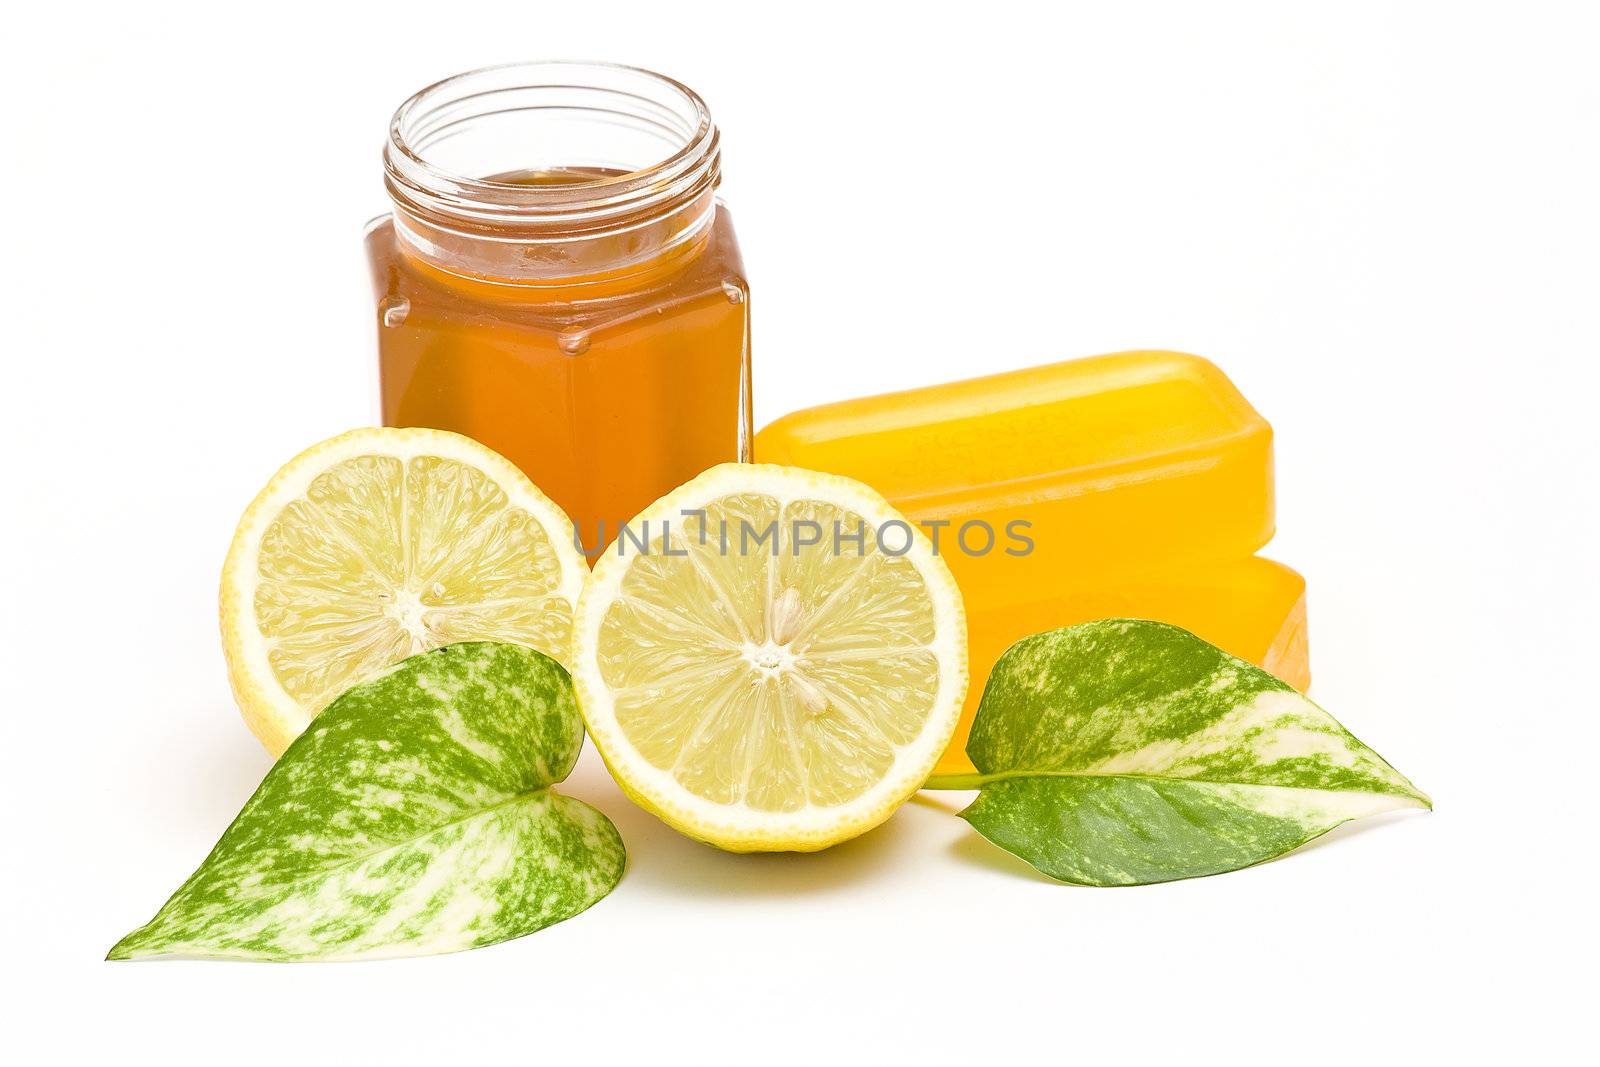 glycerin soap, jar of honey and lemon  by miradrozdowski